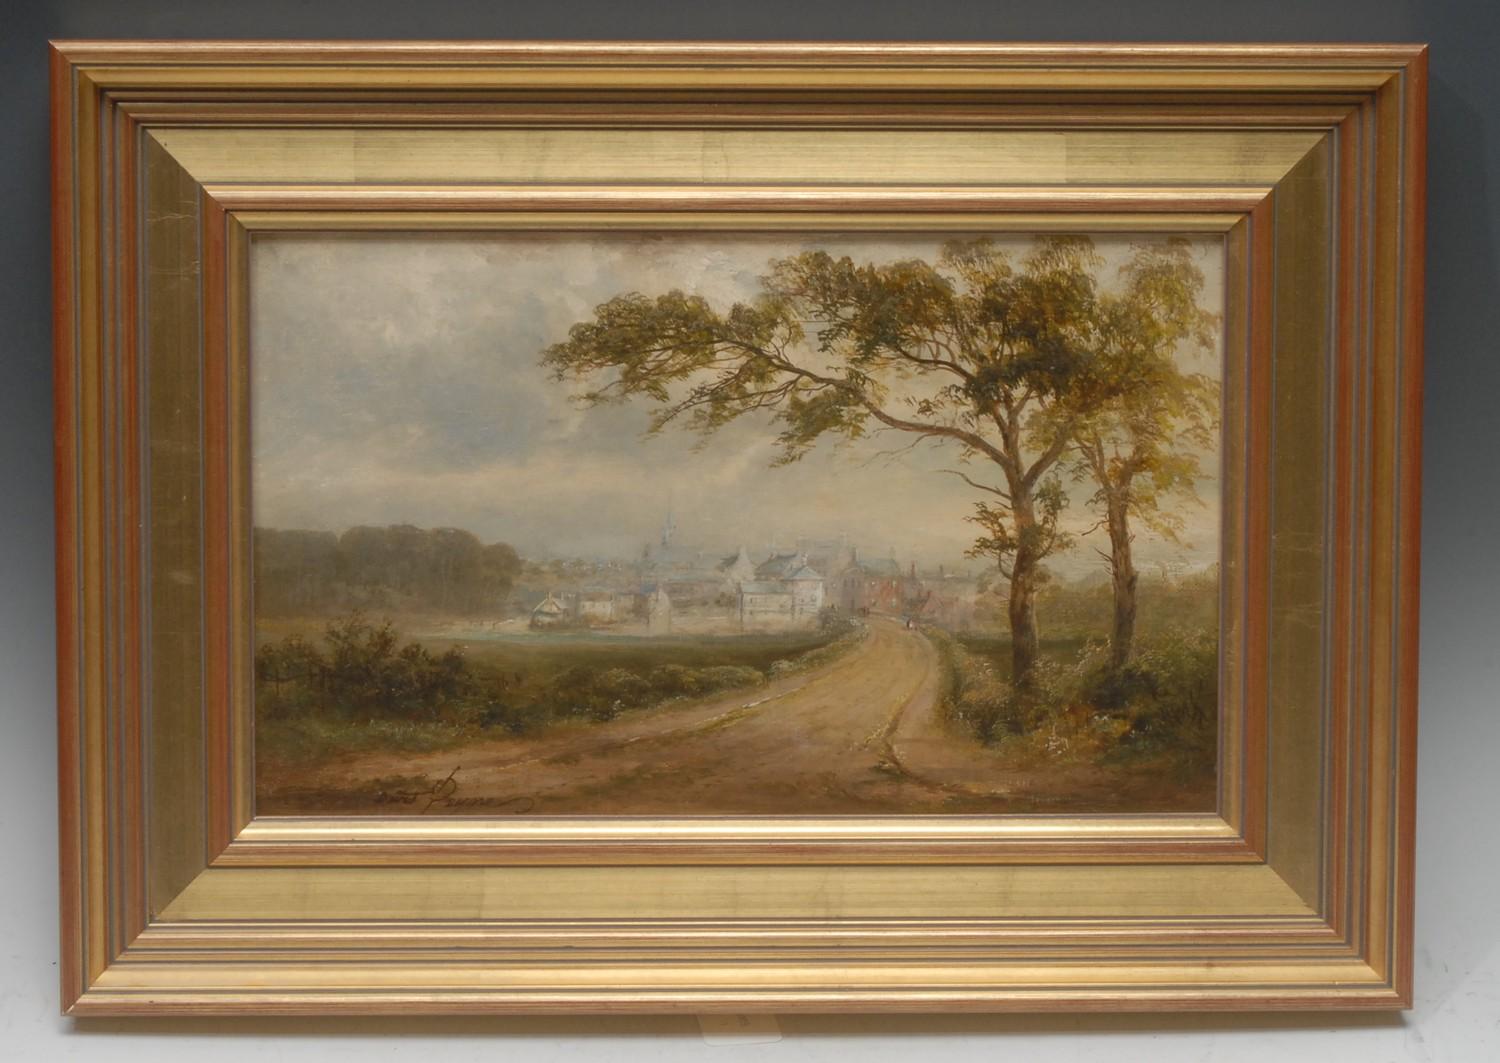 David Payne (1843-1894) Aman, Dumfrieshire signed, oil on canvas, 24cm x 39cm